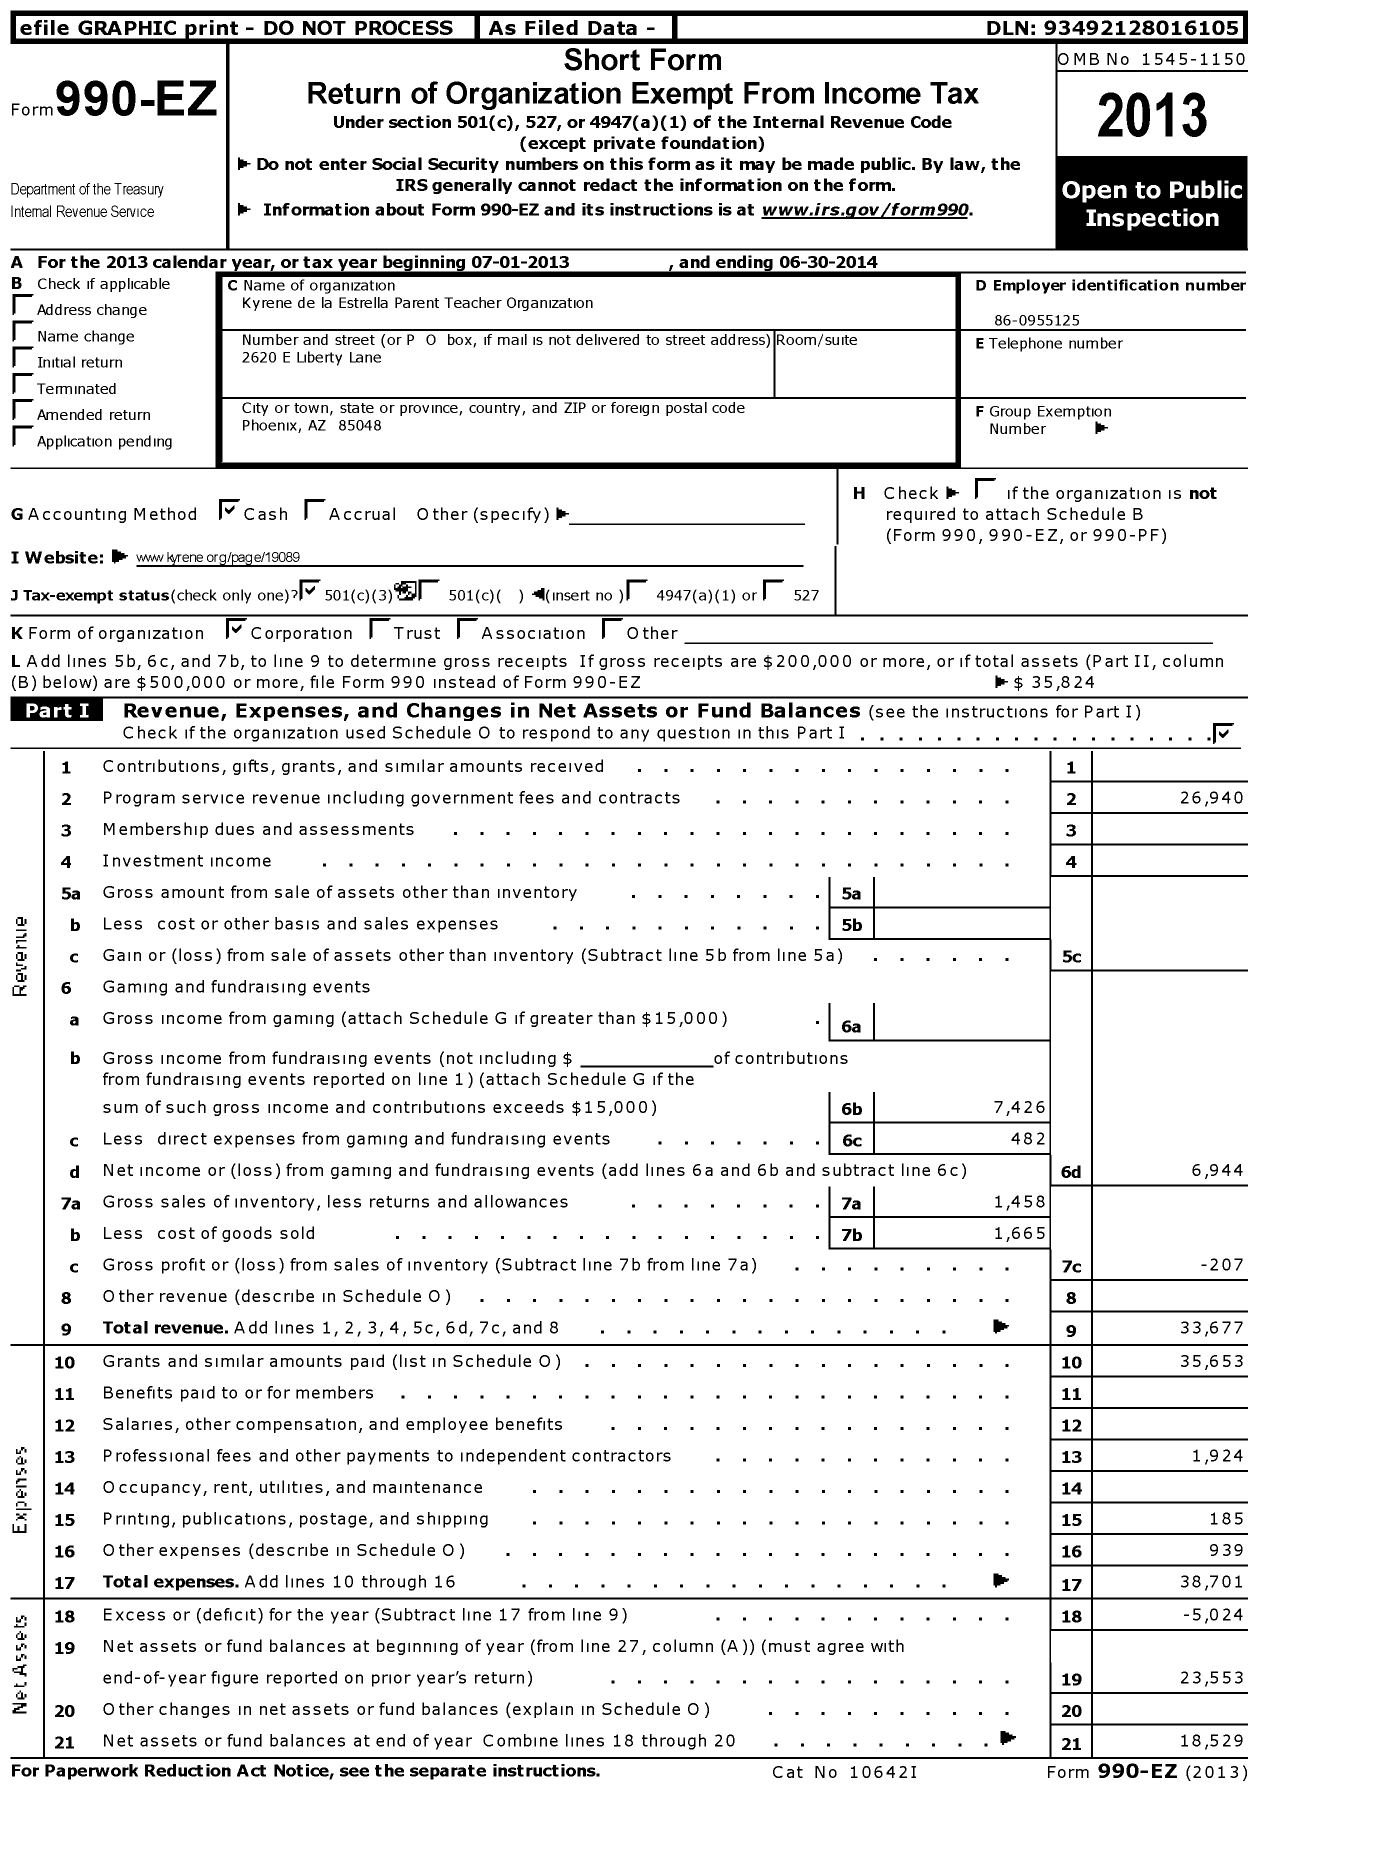 Image of first page of 2013 Form 990EZ for Kyrene de la Estrella PTO